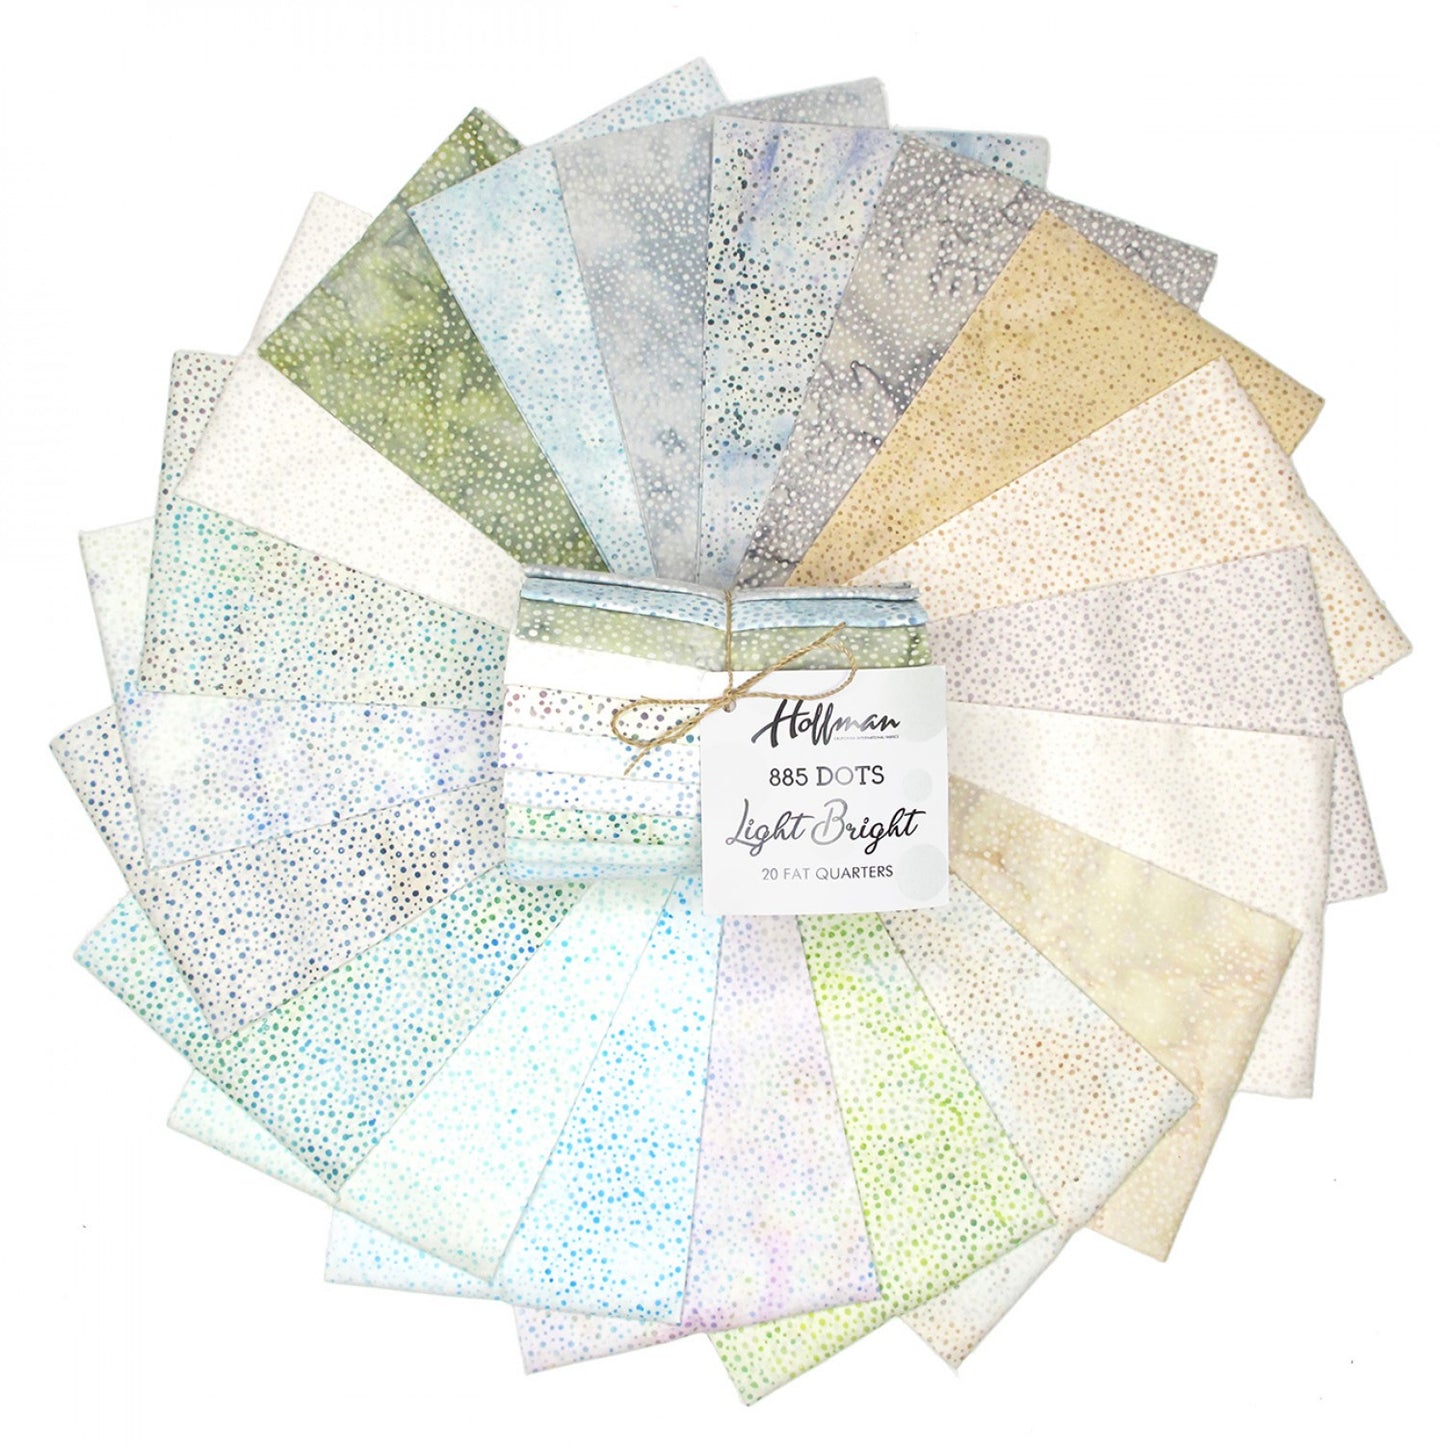 Fat Quarter Bundle - From Hoffman Fabrics 885 Bali Dot Batiks Collection - Light Bright